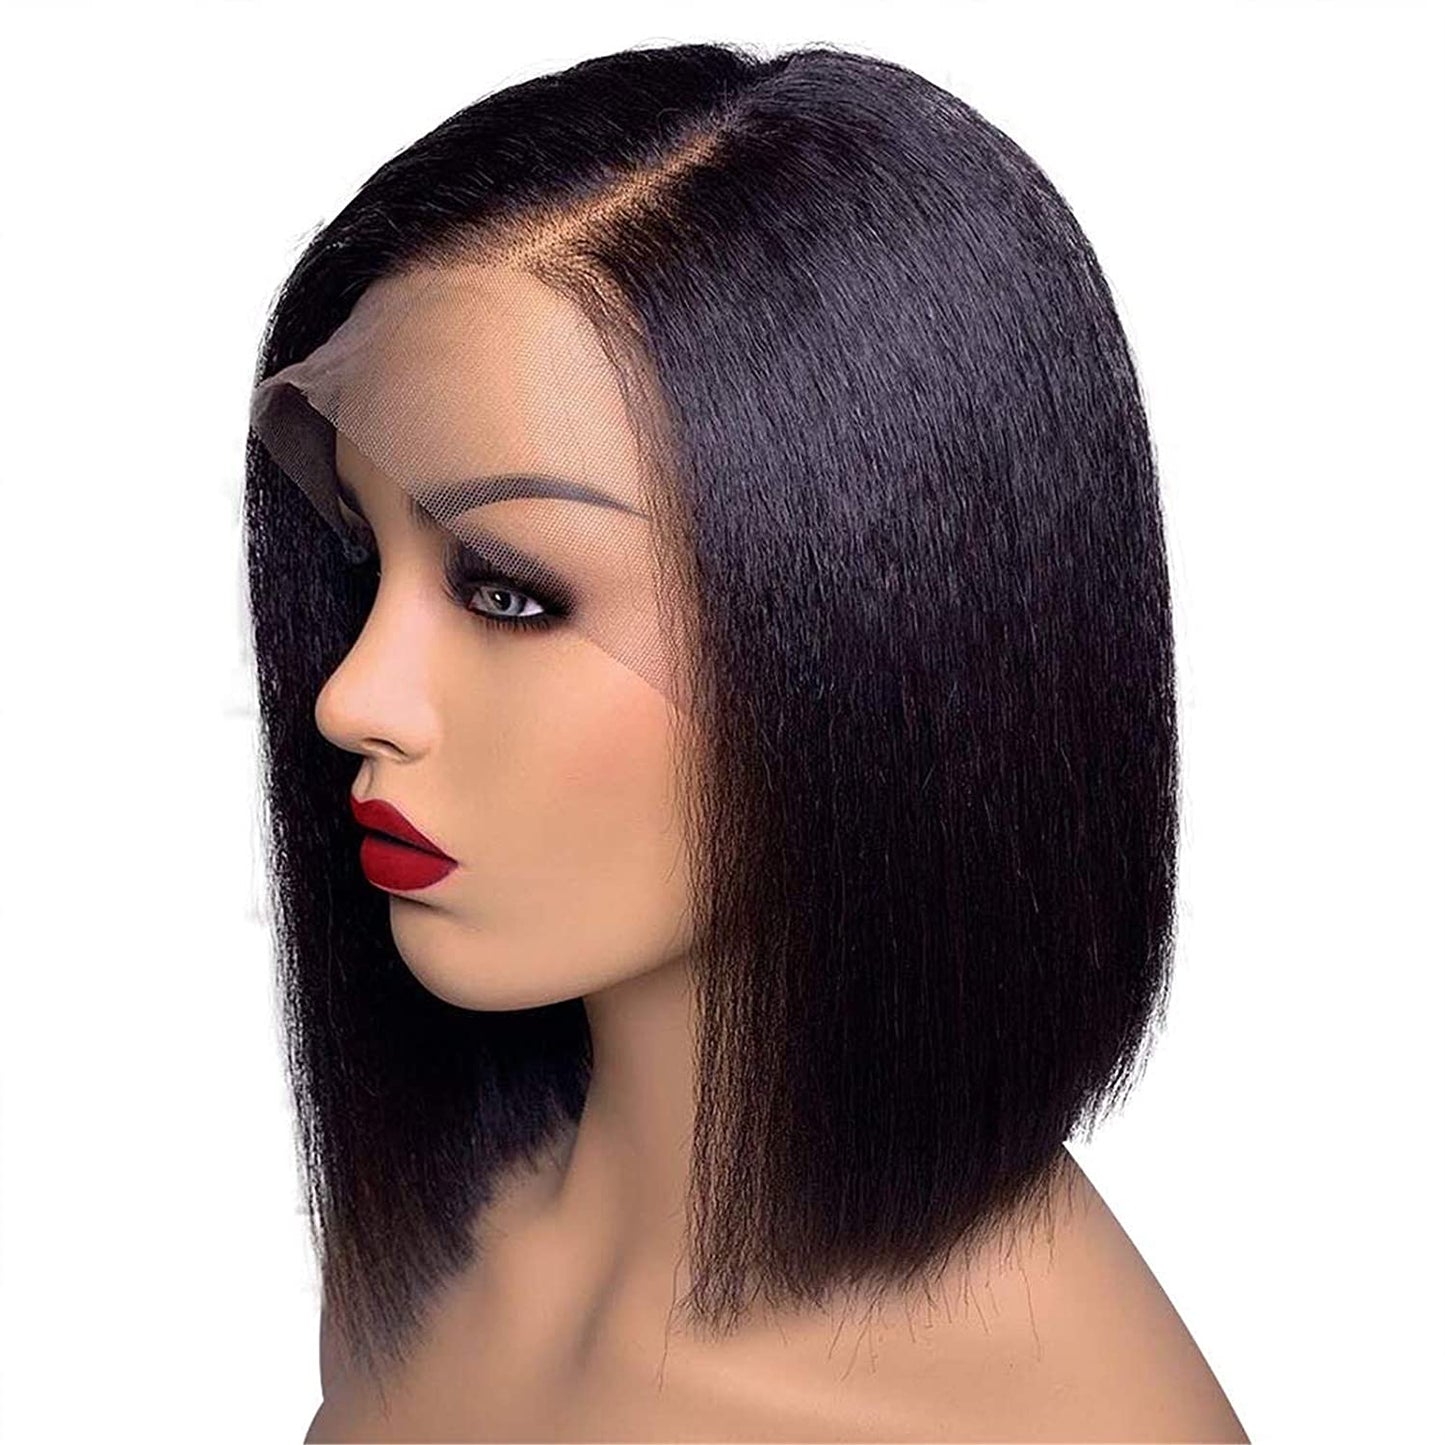  Kinky Straight Human Hair Wigs For Black Women 4x4 Lace Yaki Wigs Human Hair Glueless wigs 14-22 Inch Brazilian Virgin Remy Yaki Hair Wigs 150%. https://www.feelmorelikeuhair.com/products/yaky-kinky-straight-lace-front-wig